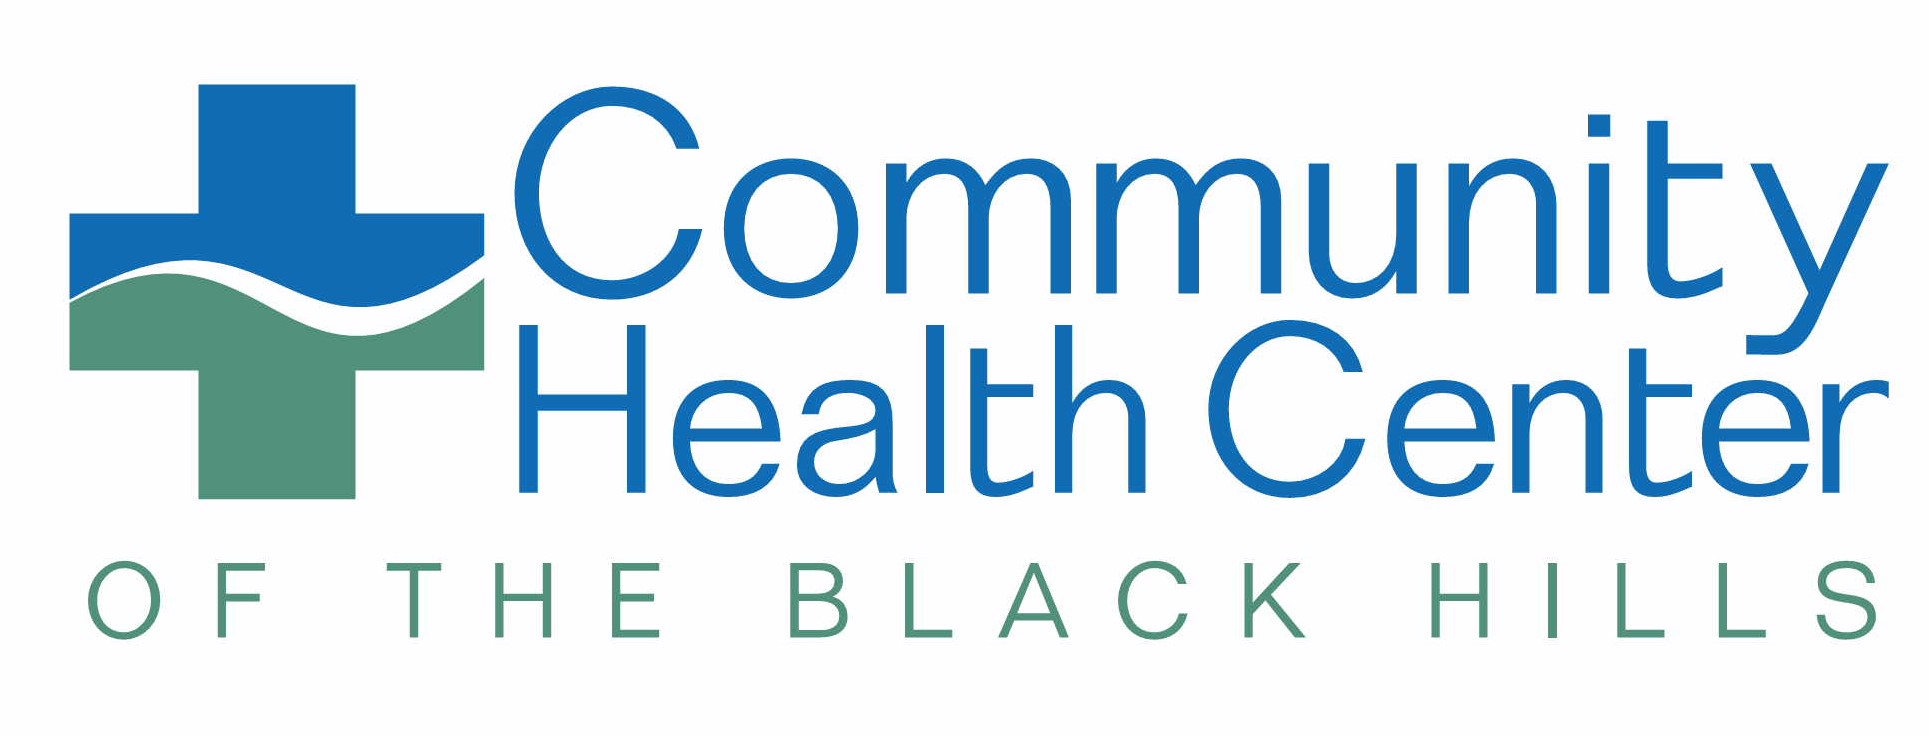 Community Health Center of the Black Hills